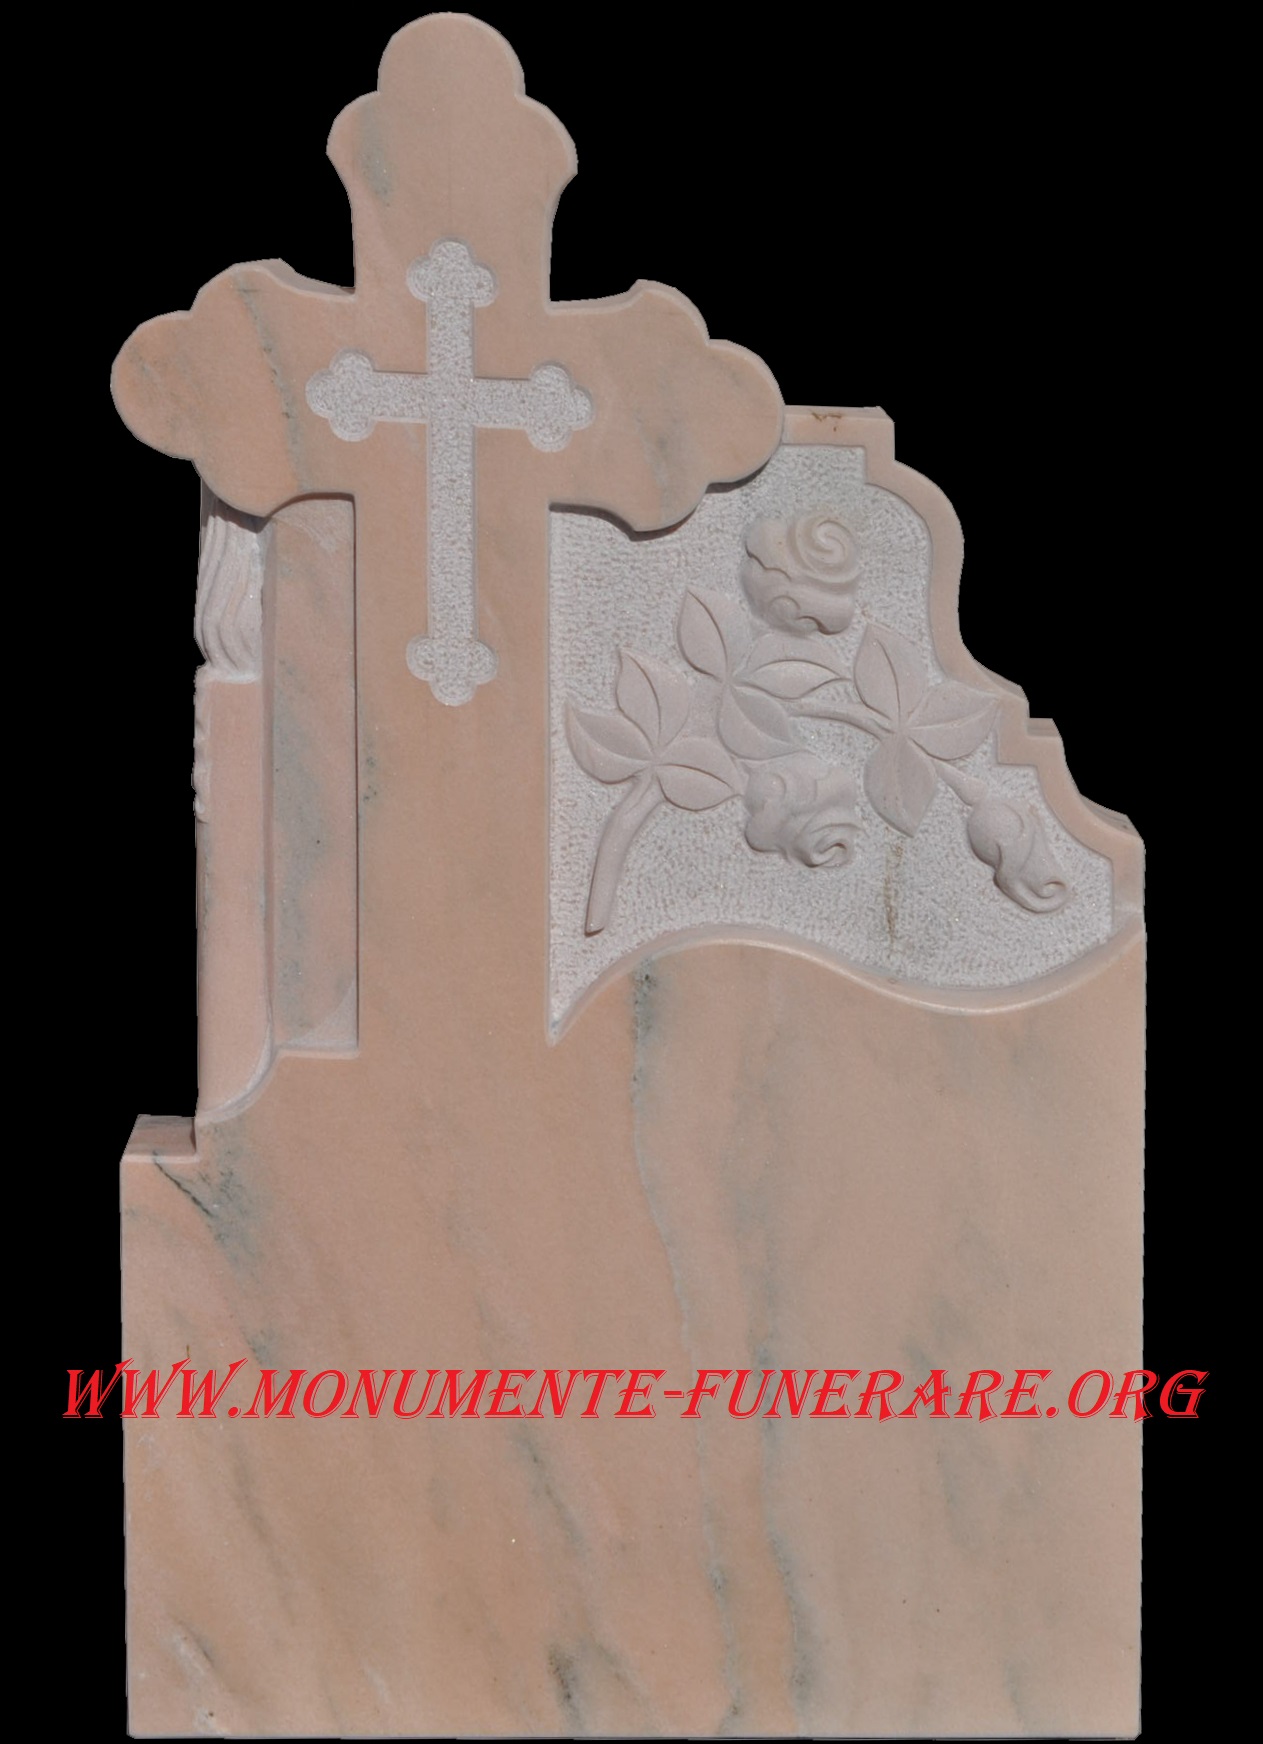 monument funerar model stylaz8